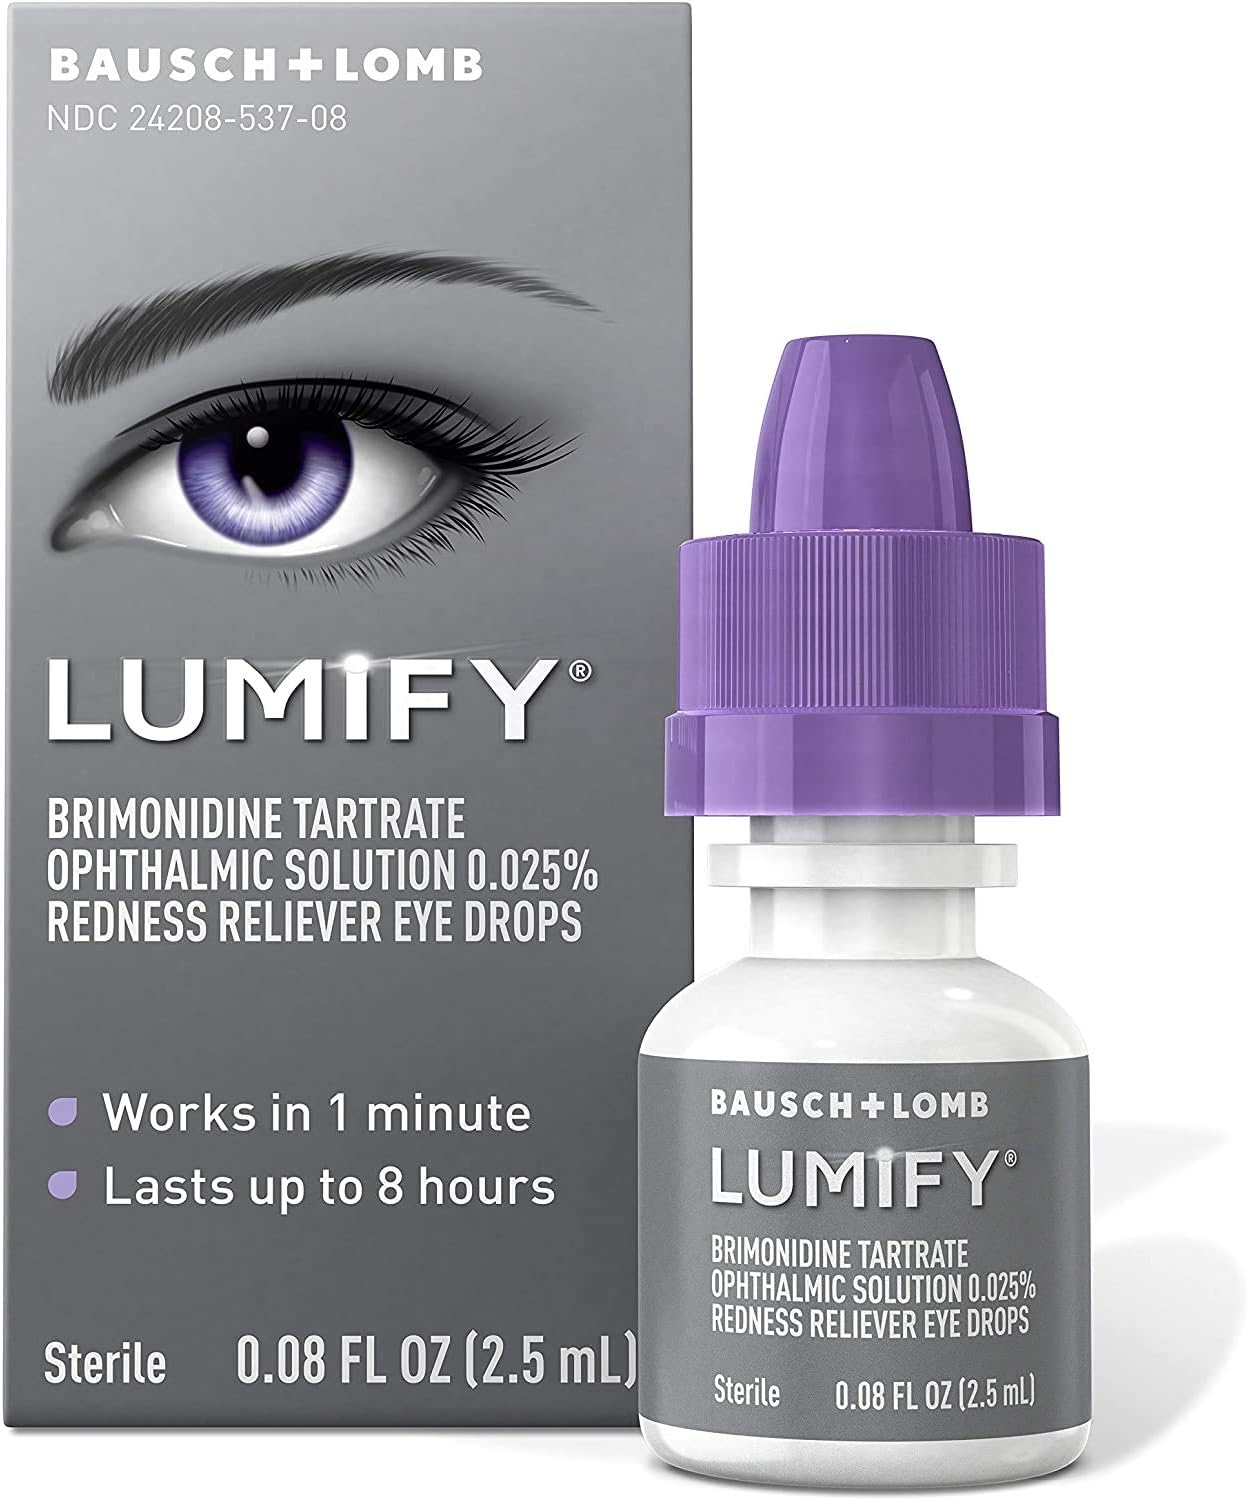 Bausch + Lomb Lumify Redness Reliever Eye Drops, 0.08 2.5ml Ounce Bottle